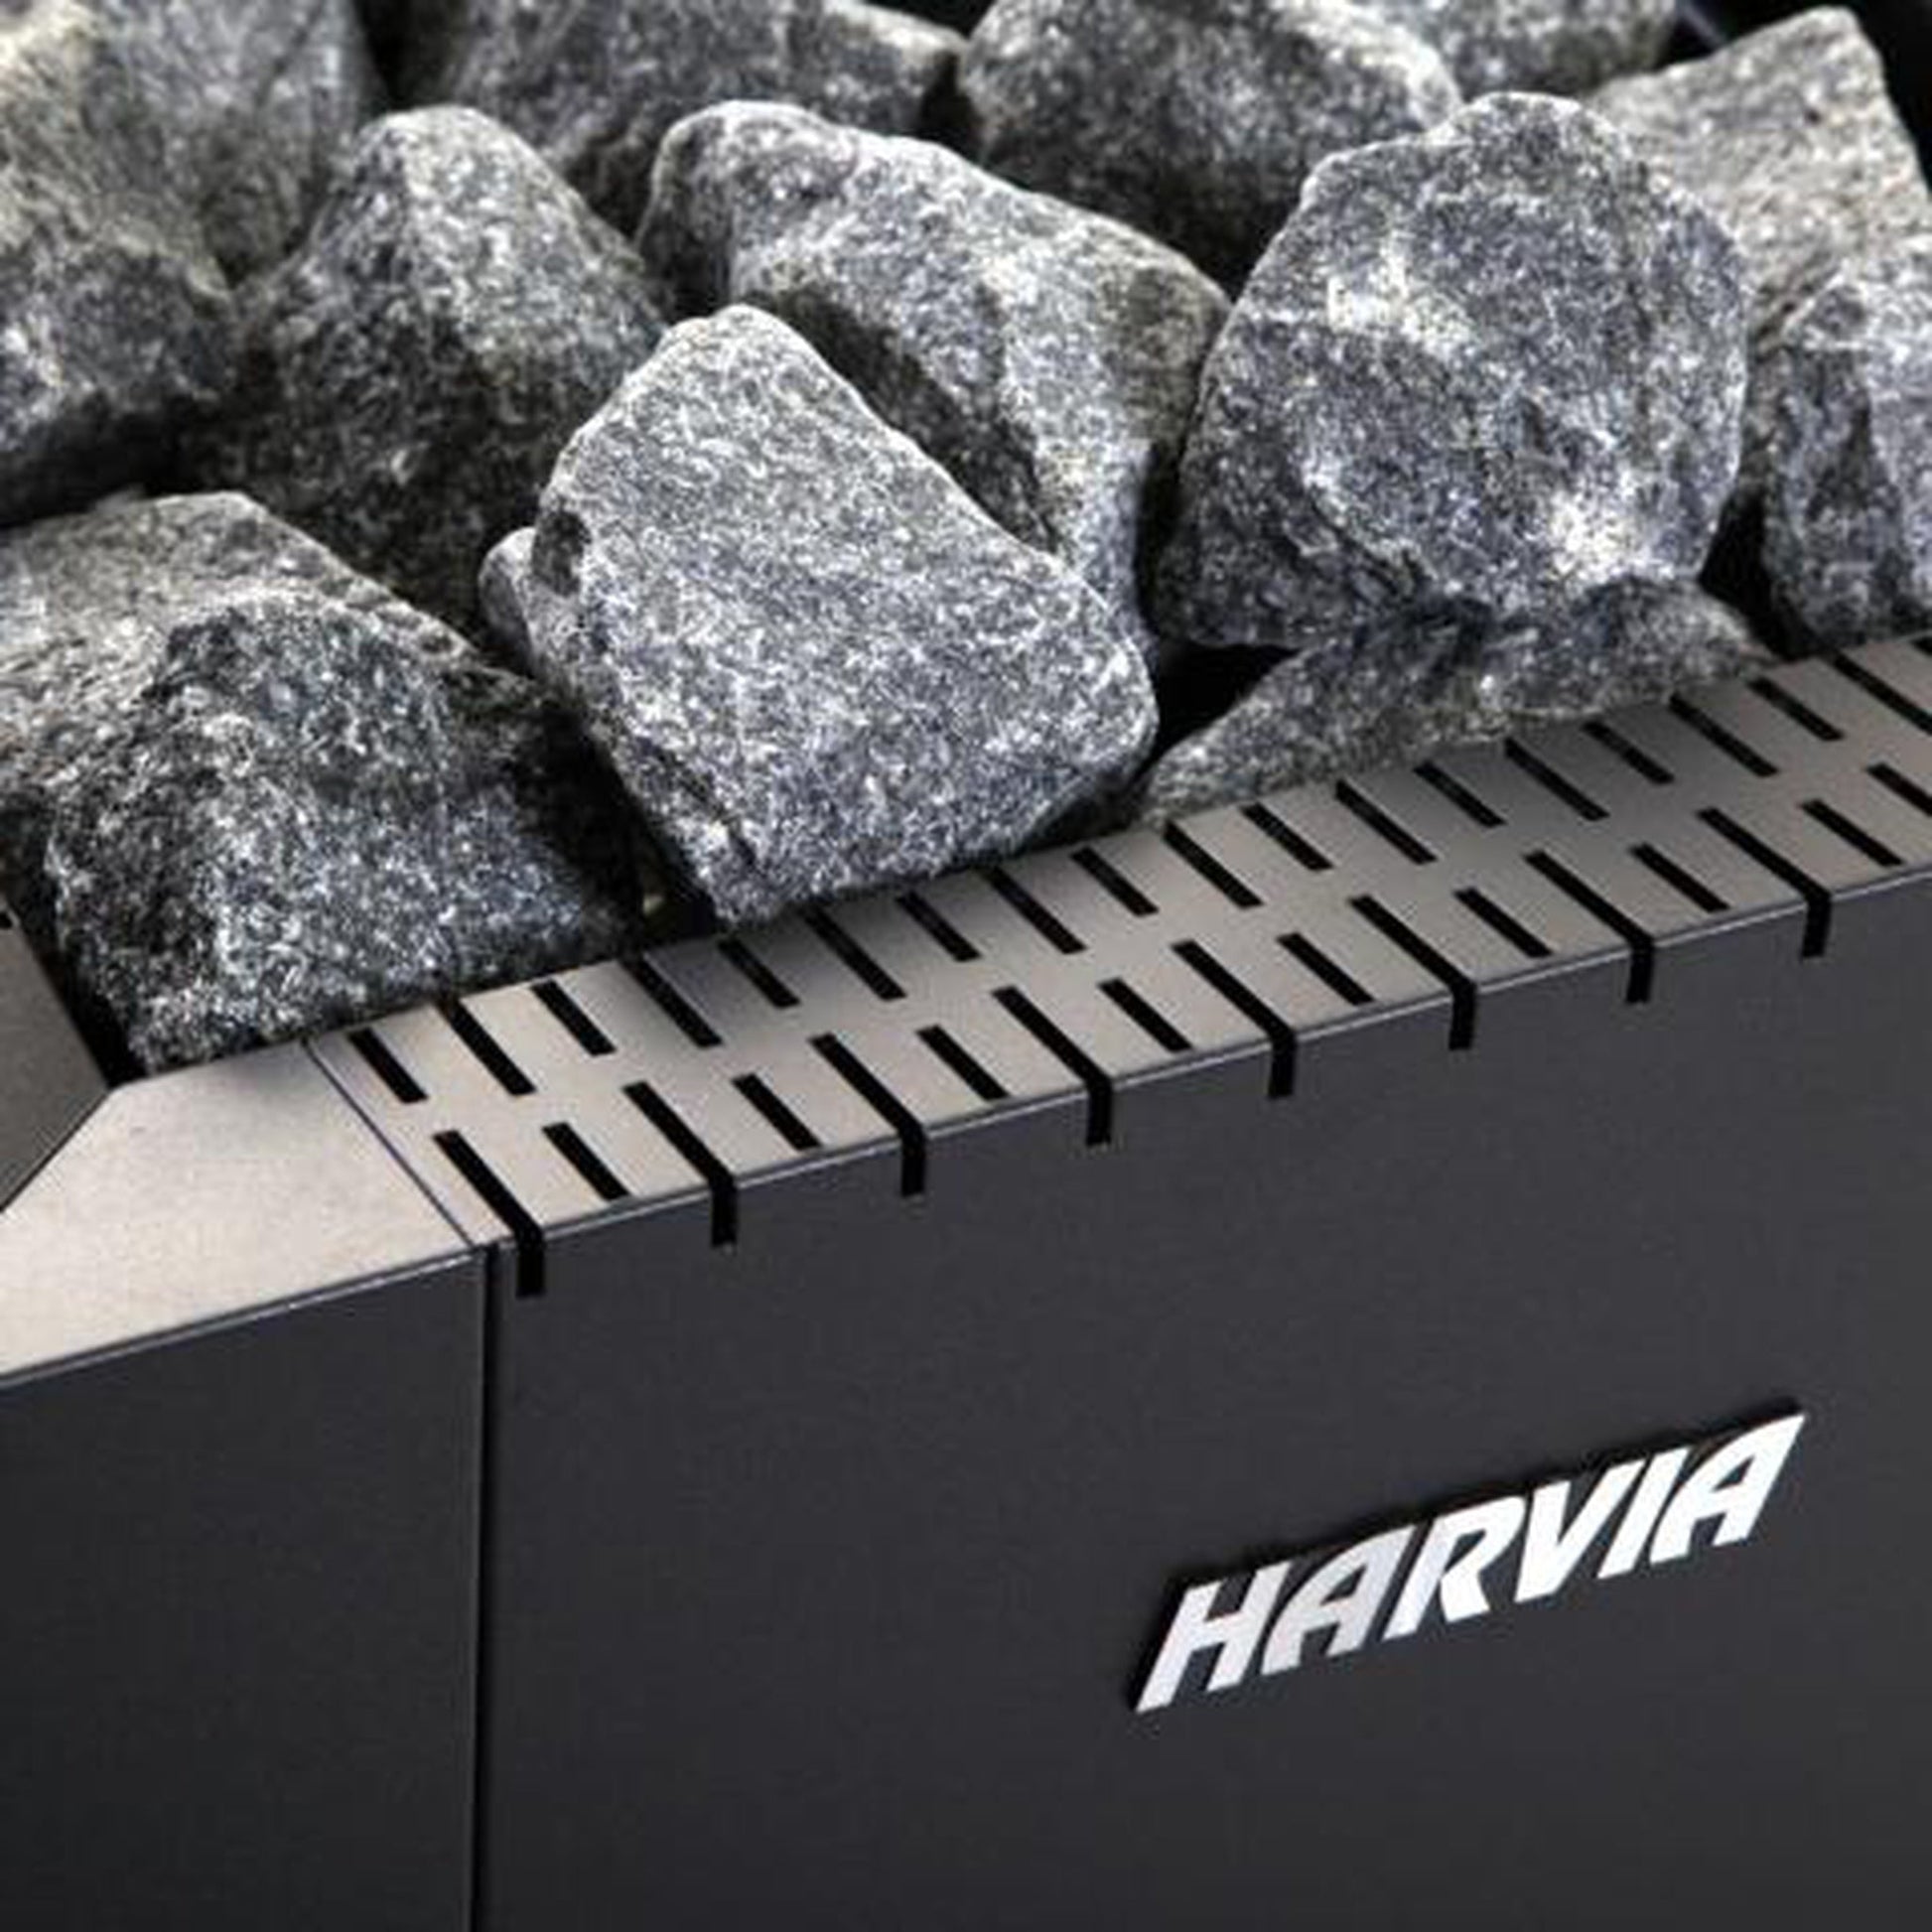 Harvia Linear 17.9 kW Black Stainless Steel Wood-Burning Sauna Stove